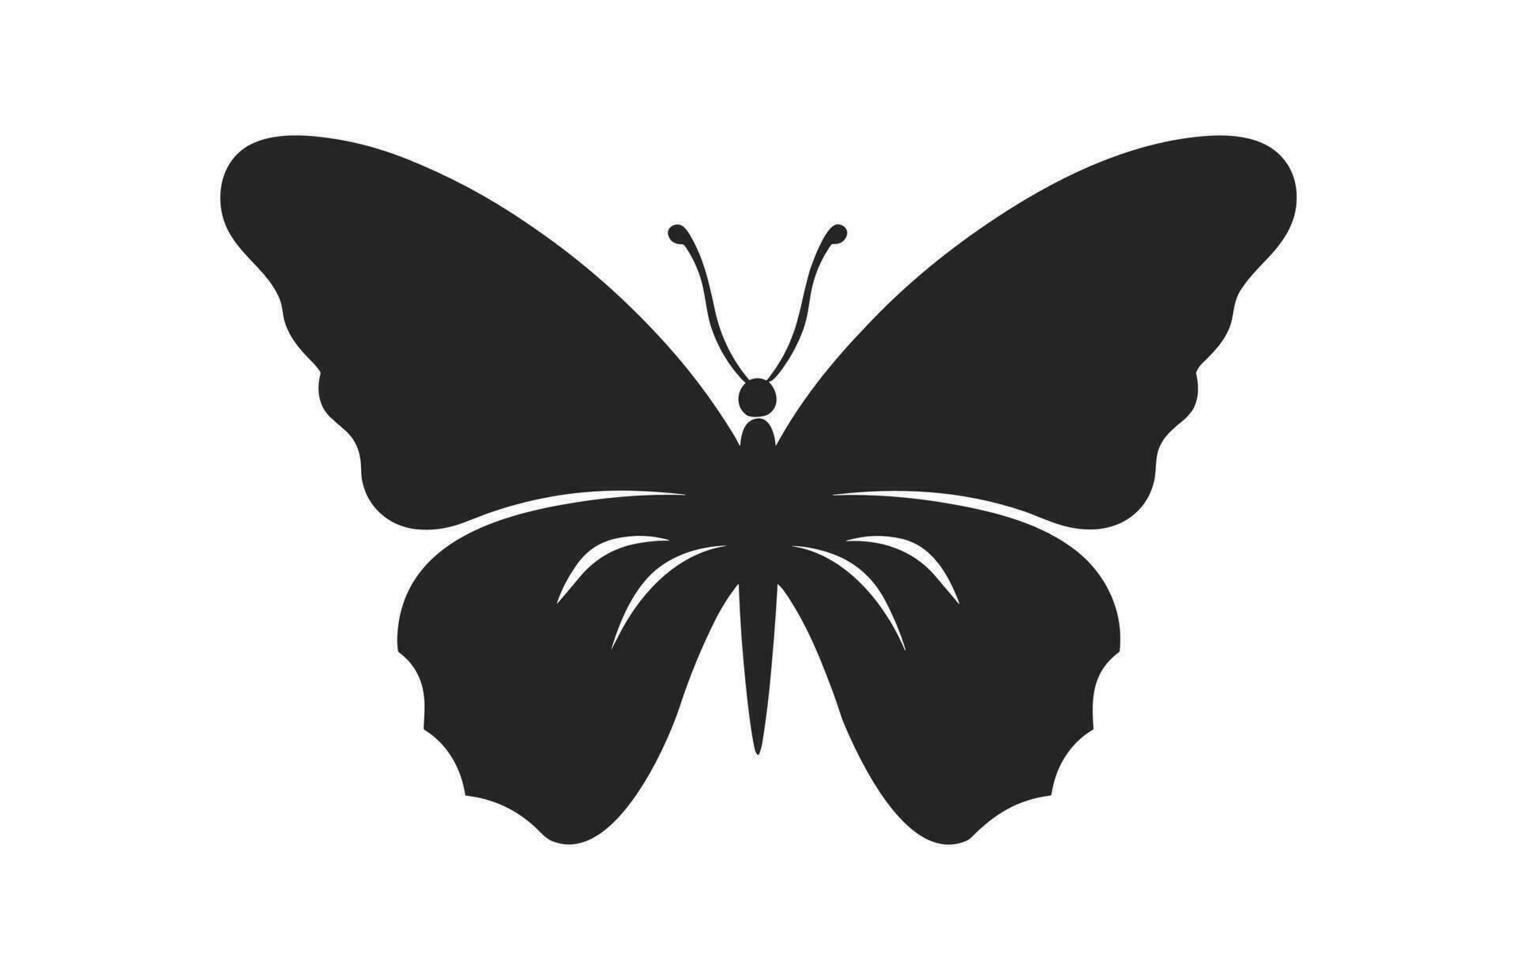 un hermosa mariposa silueta aislado en un blanco fondo, un monarca mariposa vector